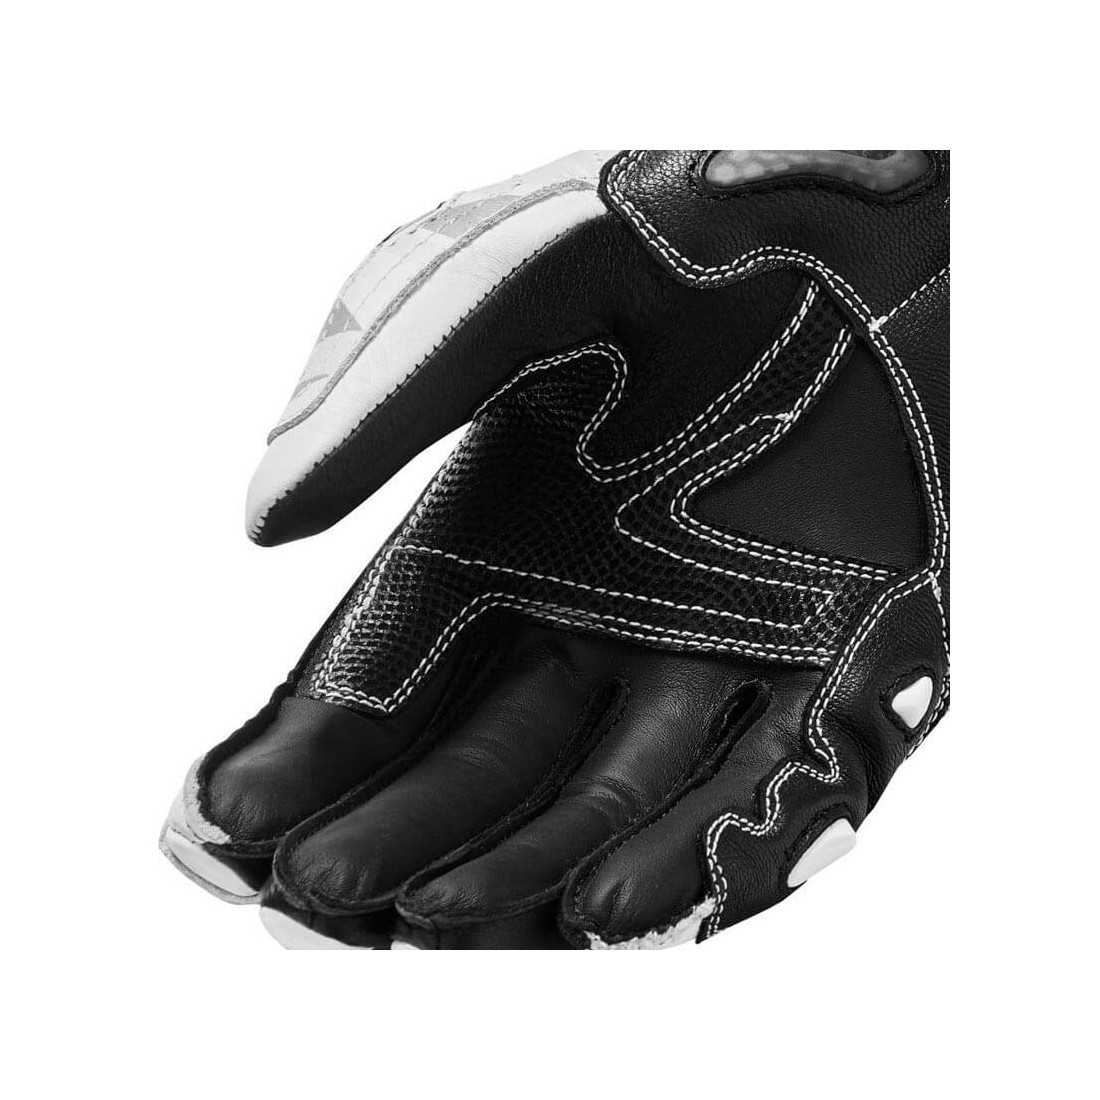 Rev'it Jerez 3 Leather Sports Motorcycle Gloves Black WhiteRevit Rev'it! 